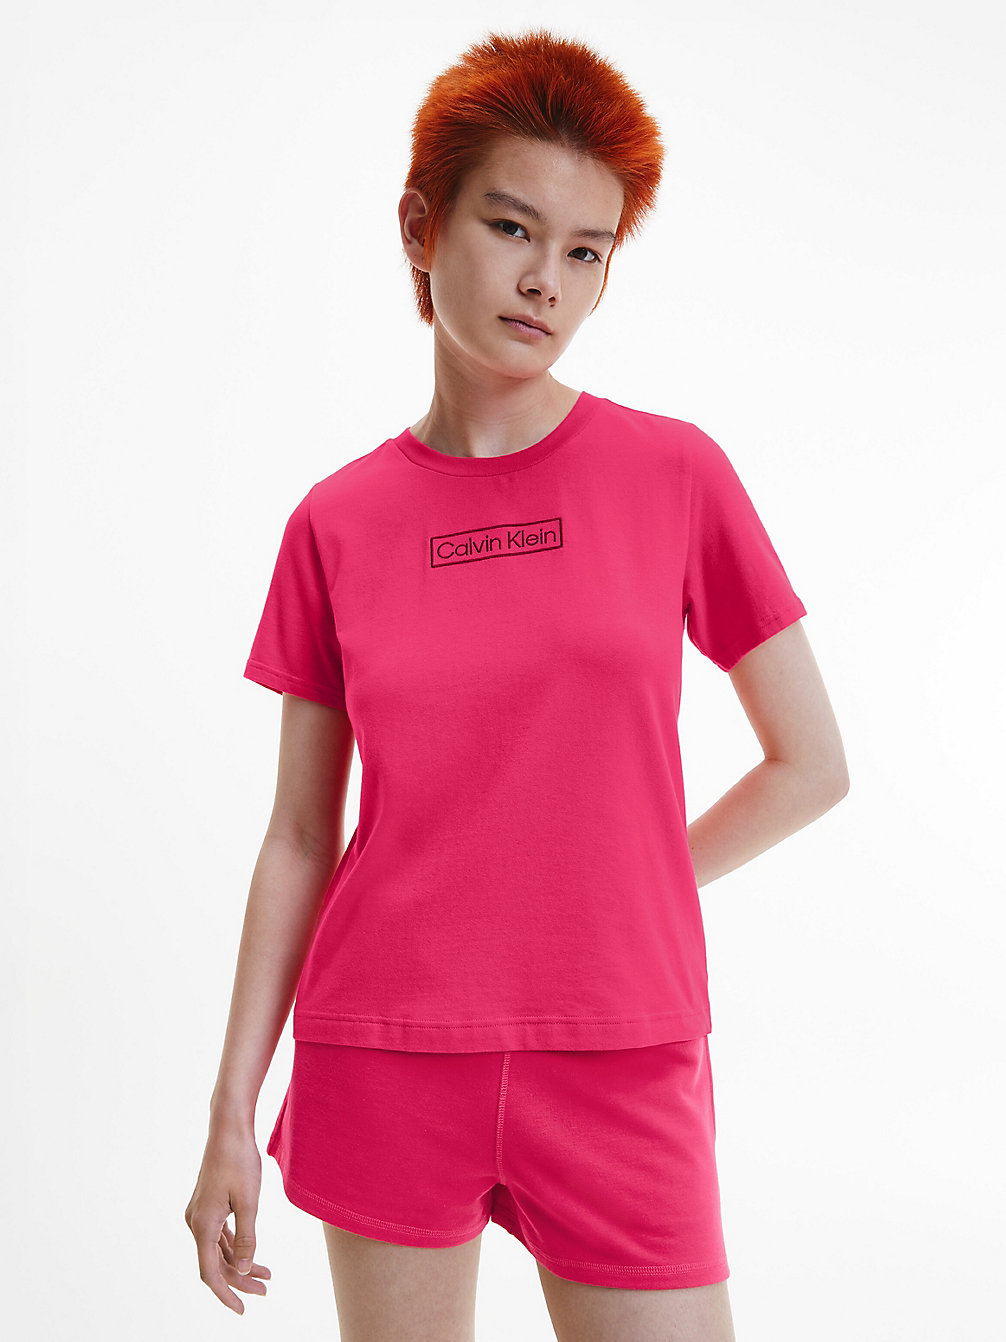 PINK SPLENDOR > Shorts-Pyjama-Set – Reimagine Heritage > undefined Damen - Calvin Klein